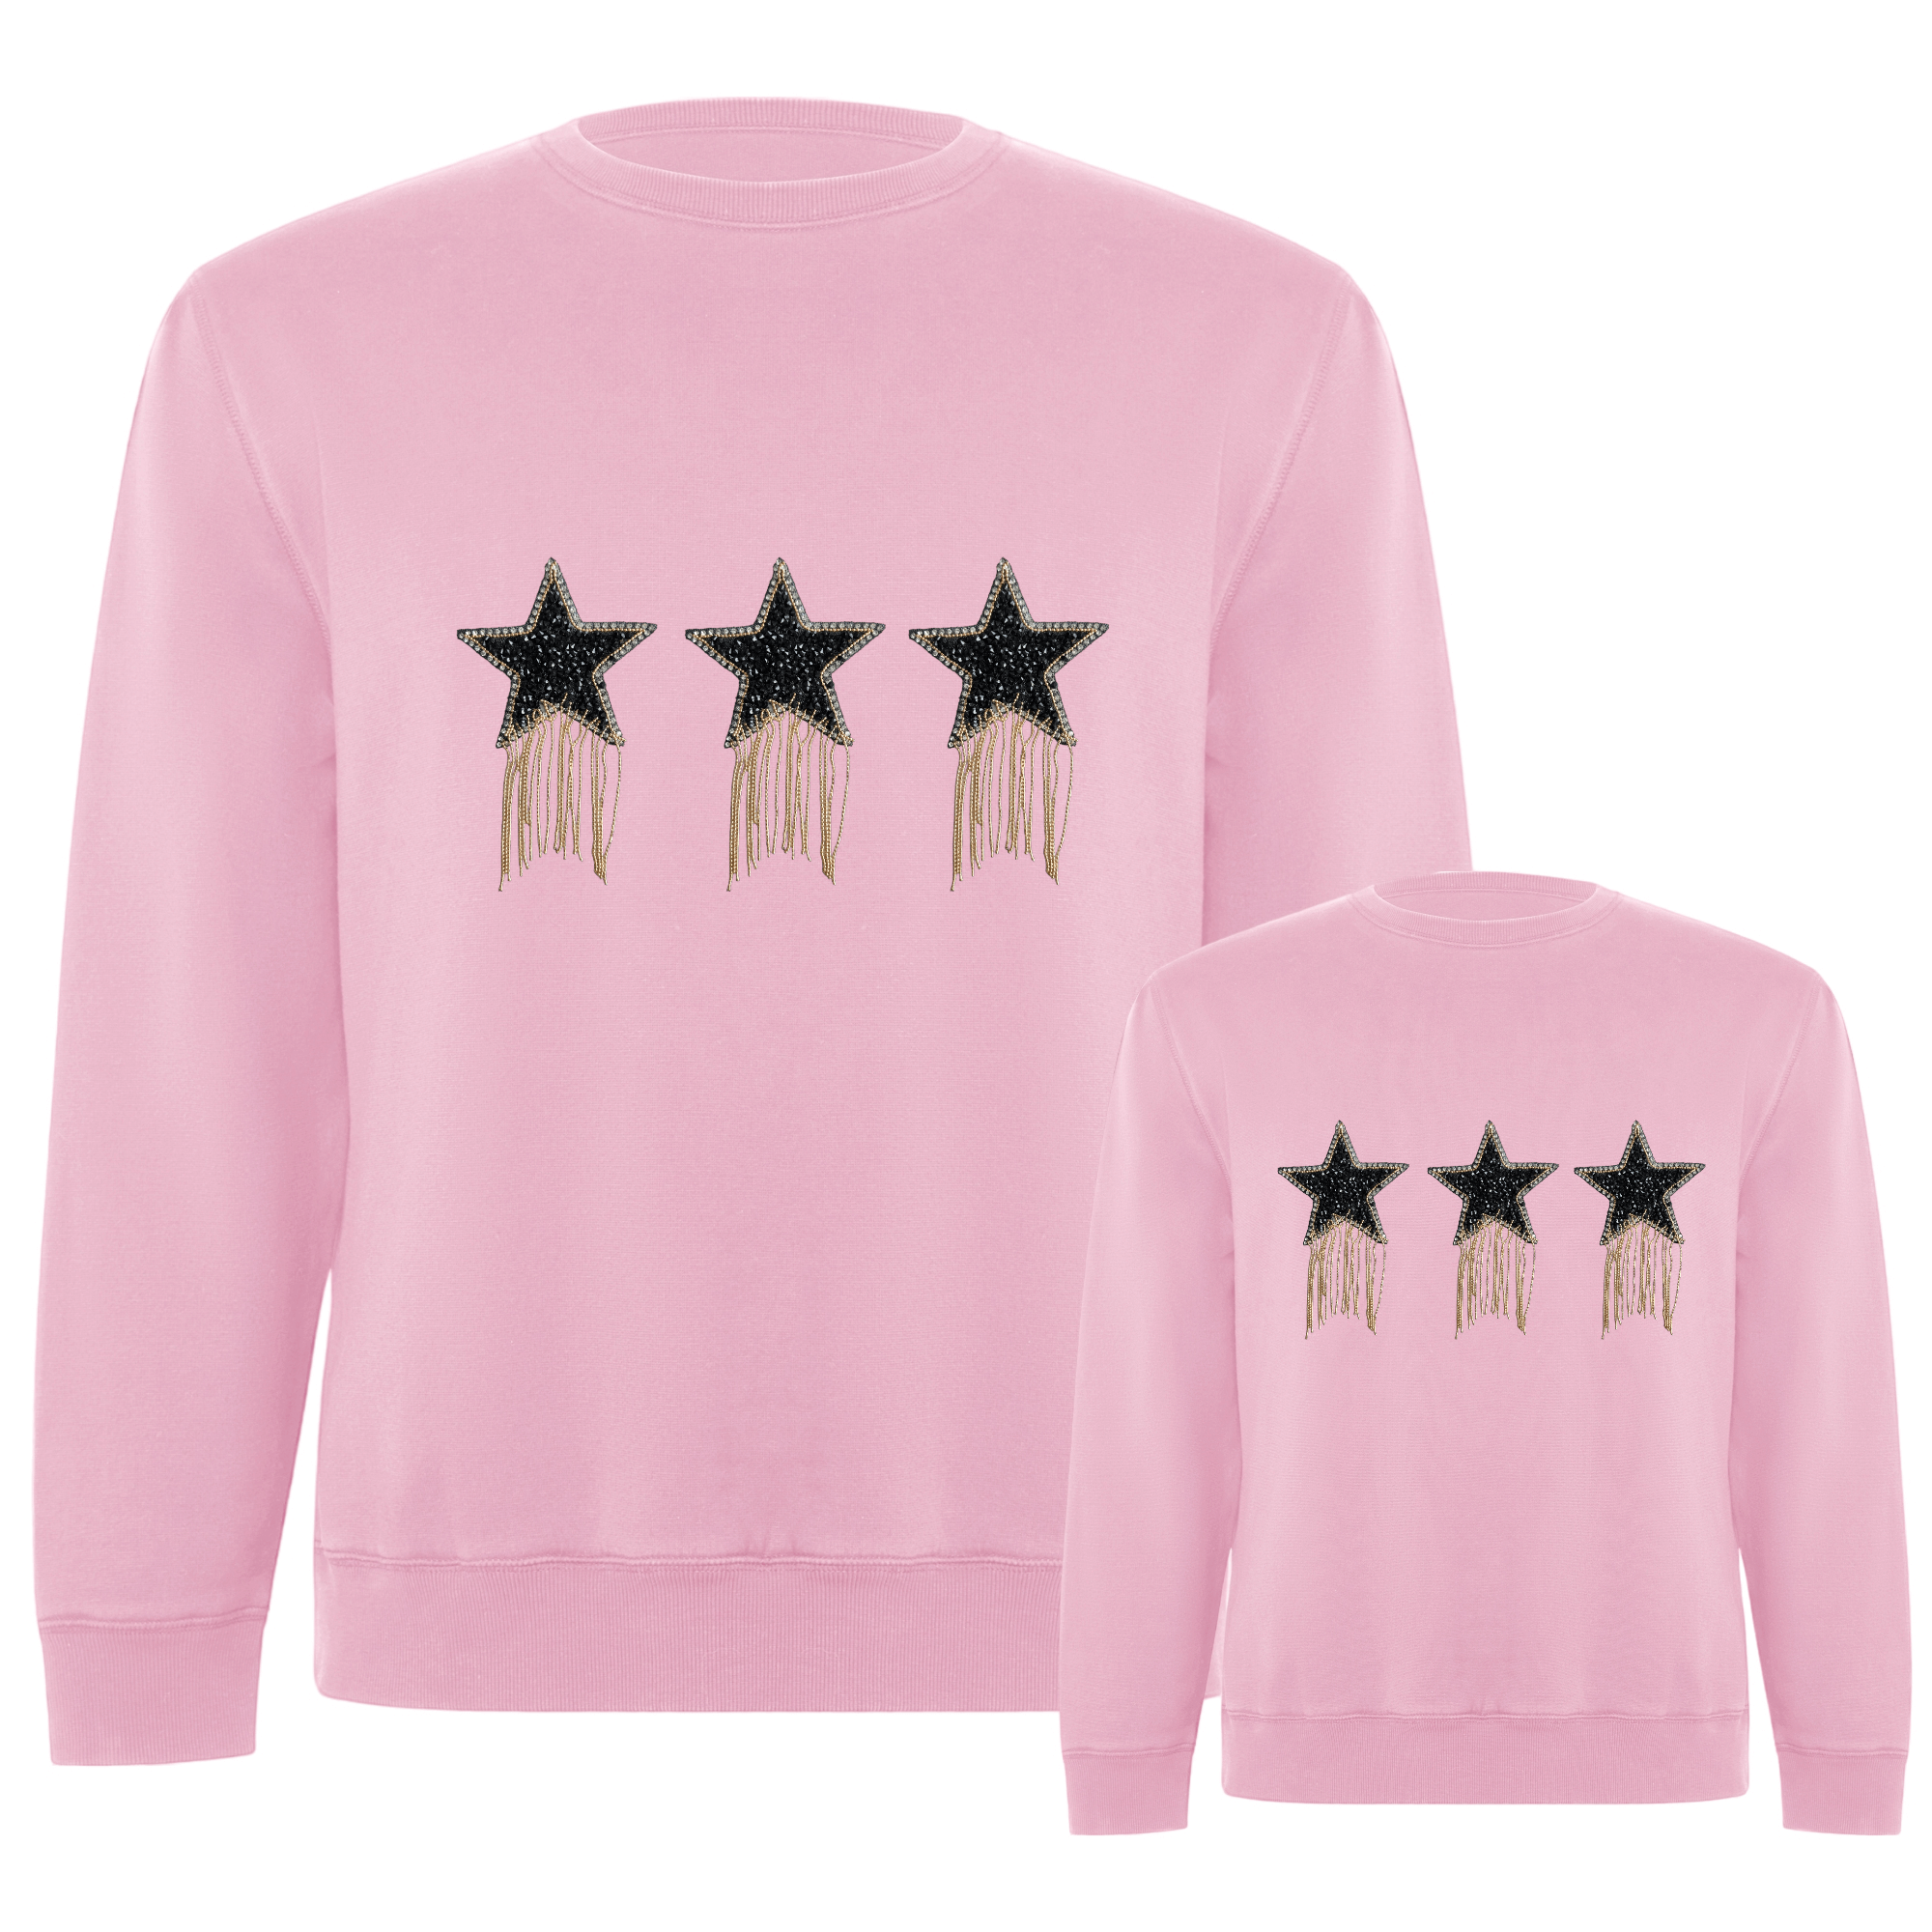 Triple Star sweatshirt